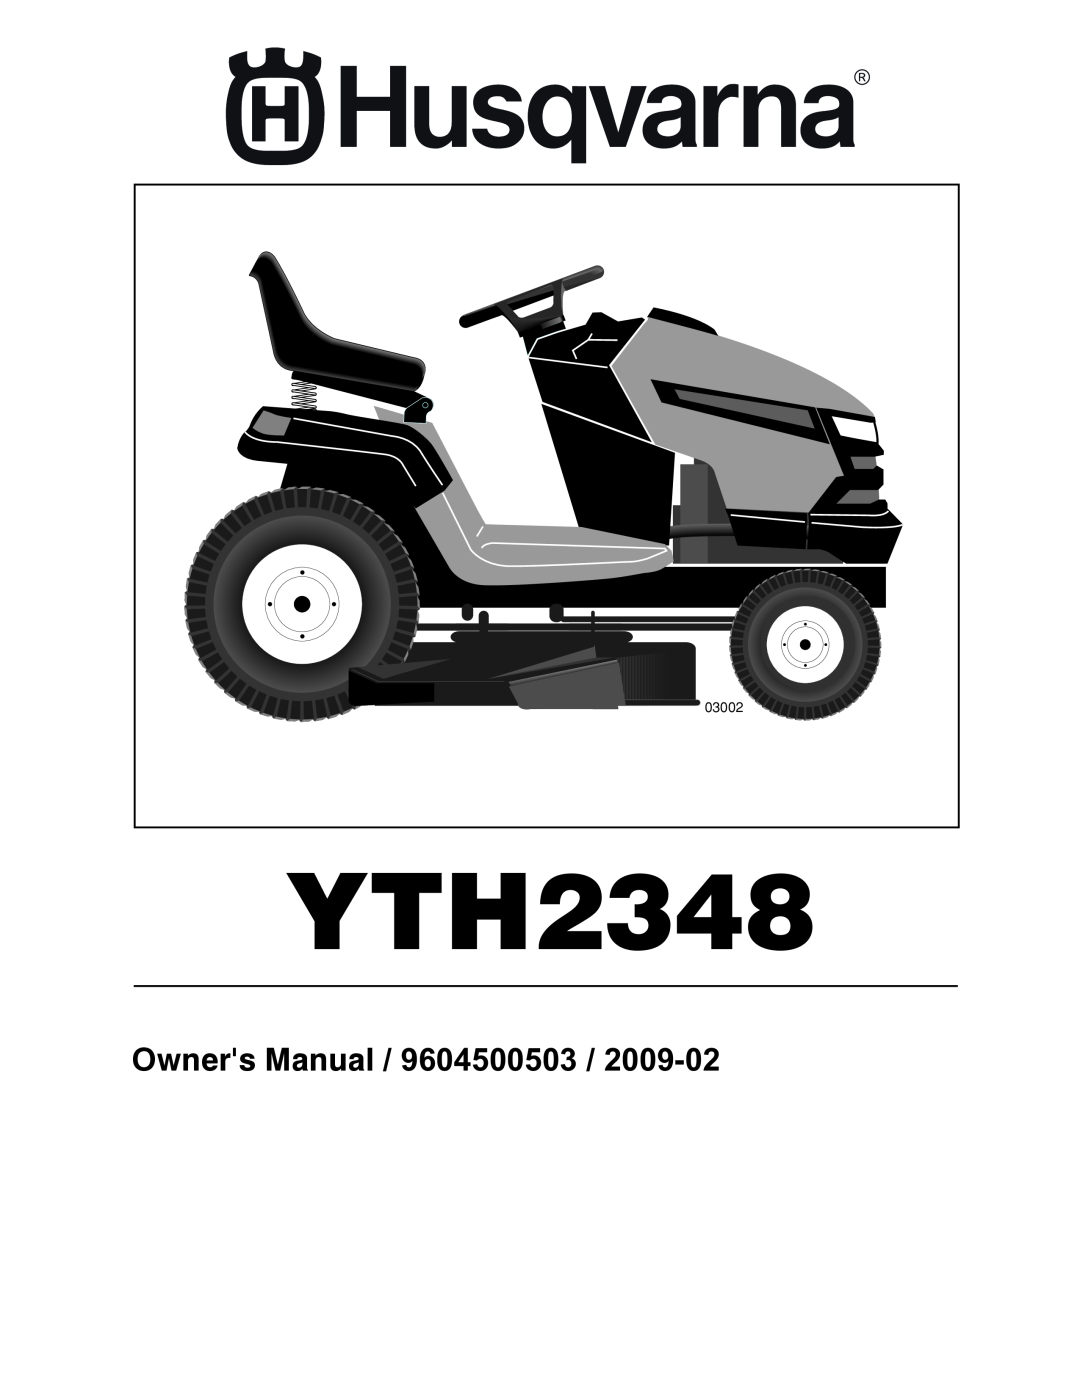 Husqvarna 96045000503 owner manual YTH2348 